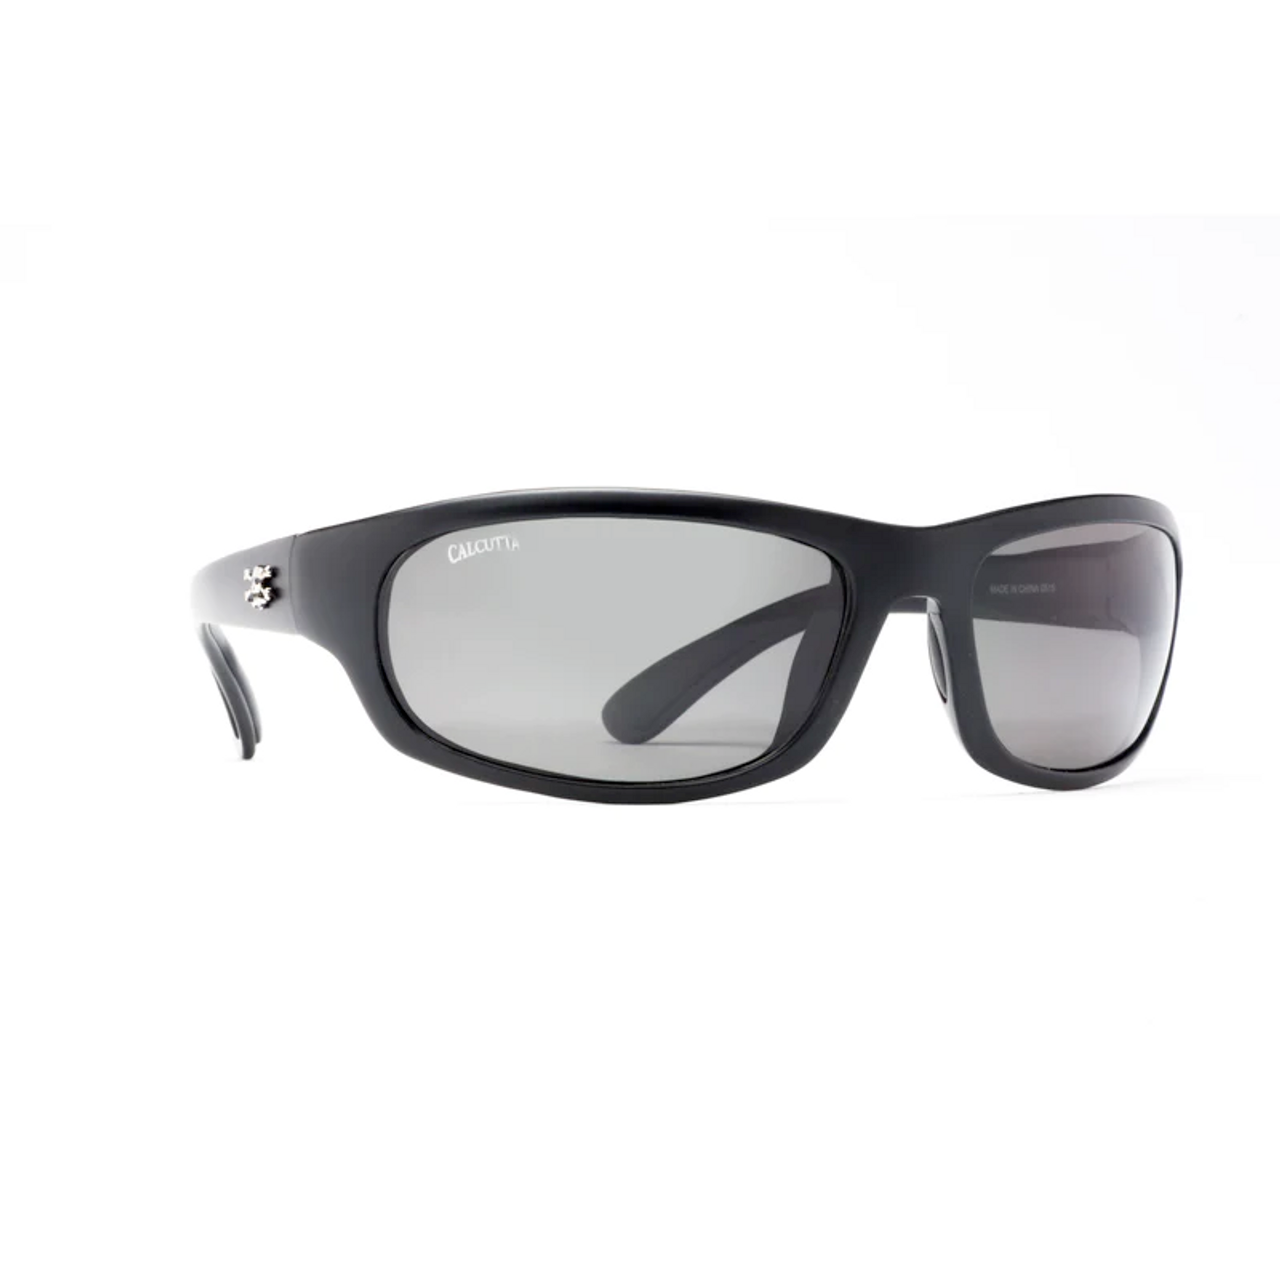 Calcutta Steelhead Sunglasses, Matte Black Frame/ Gray Lens